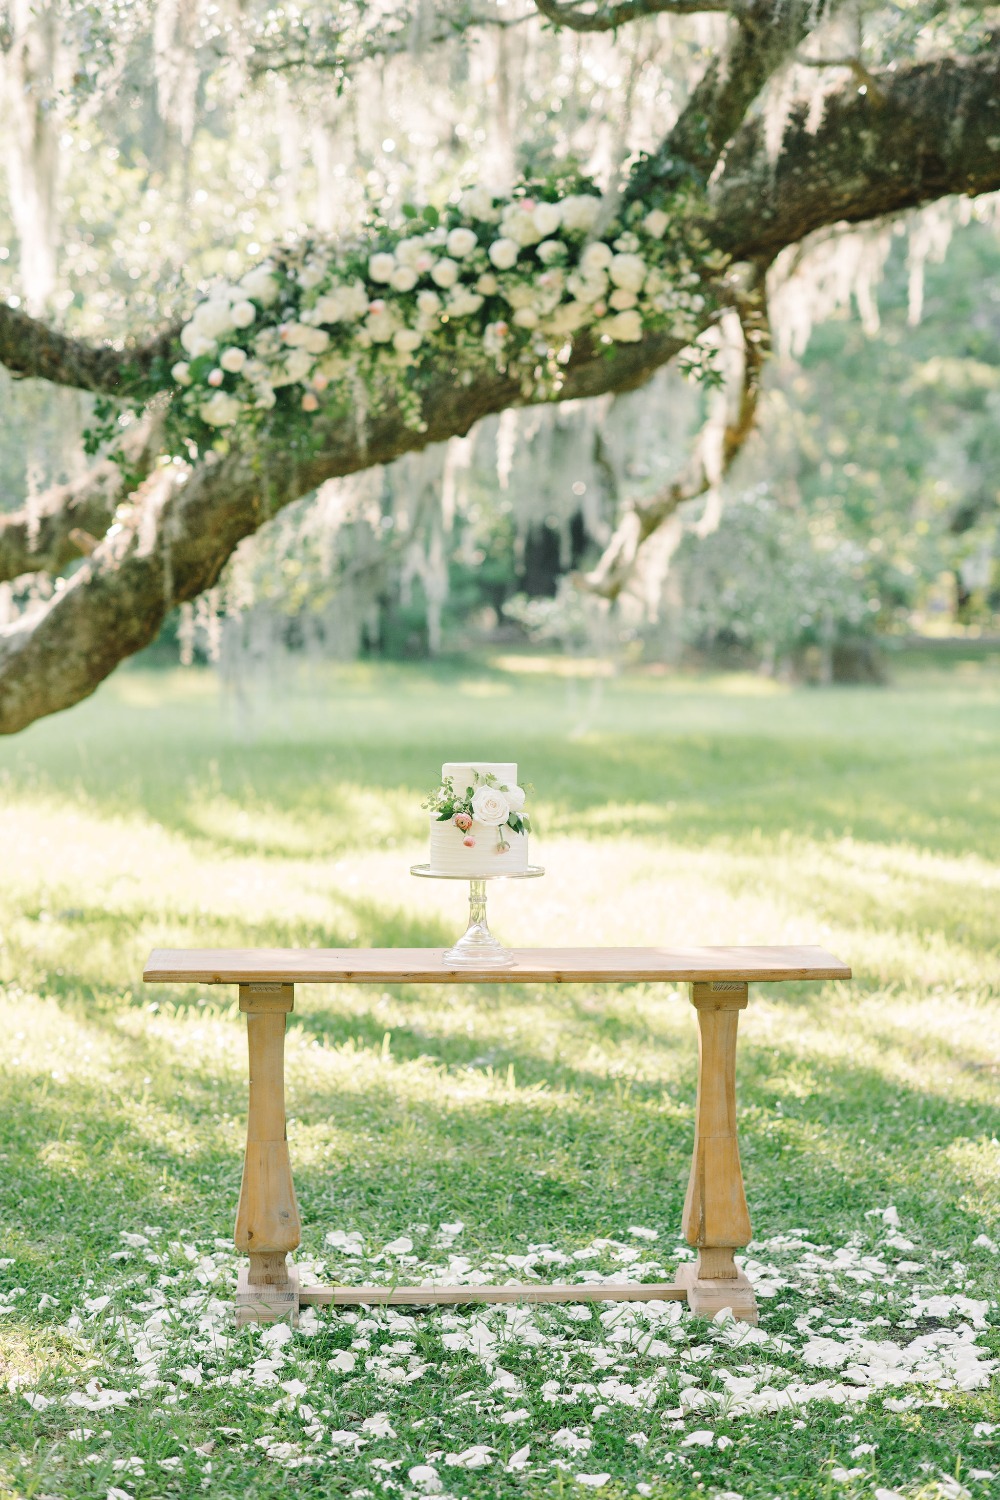 romantic wedding cake table